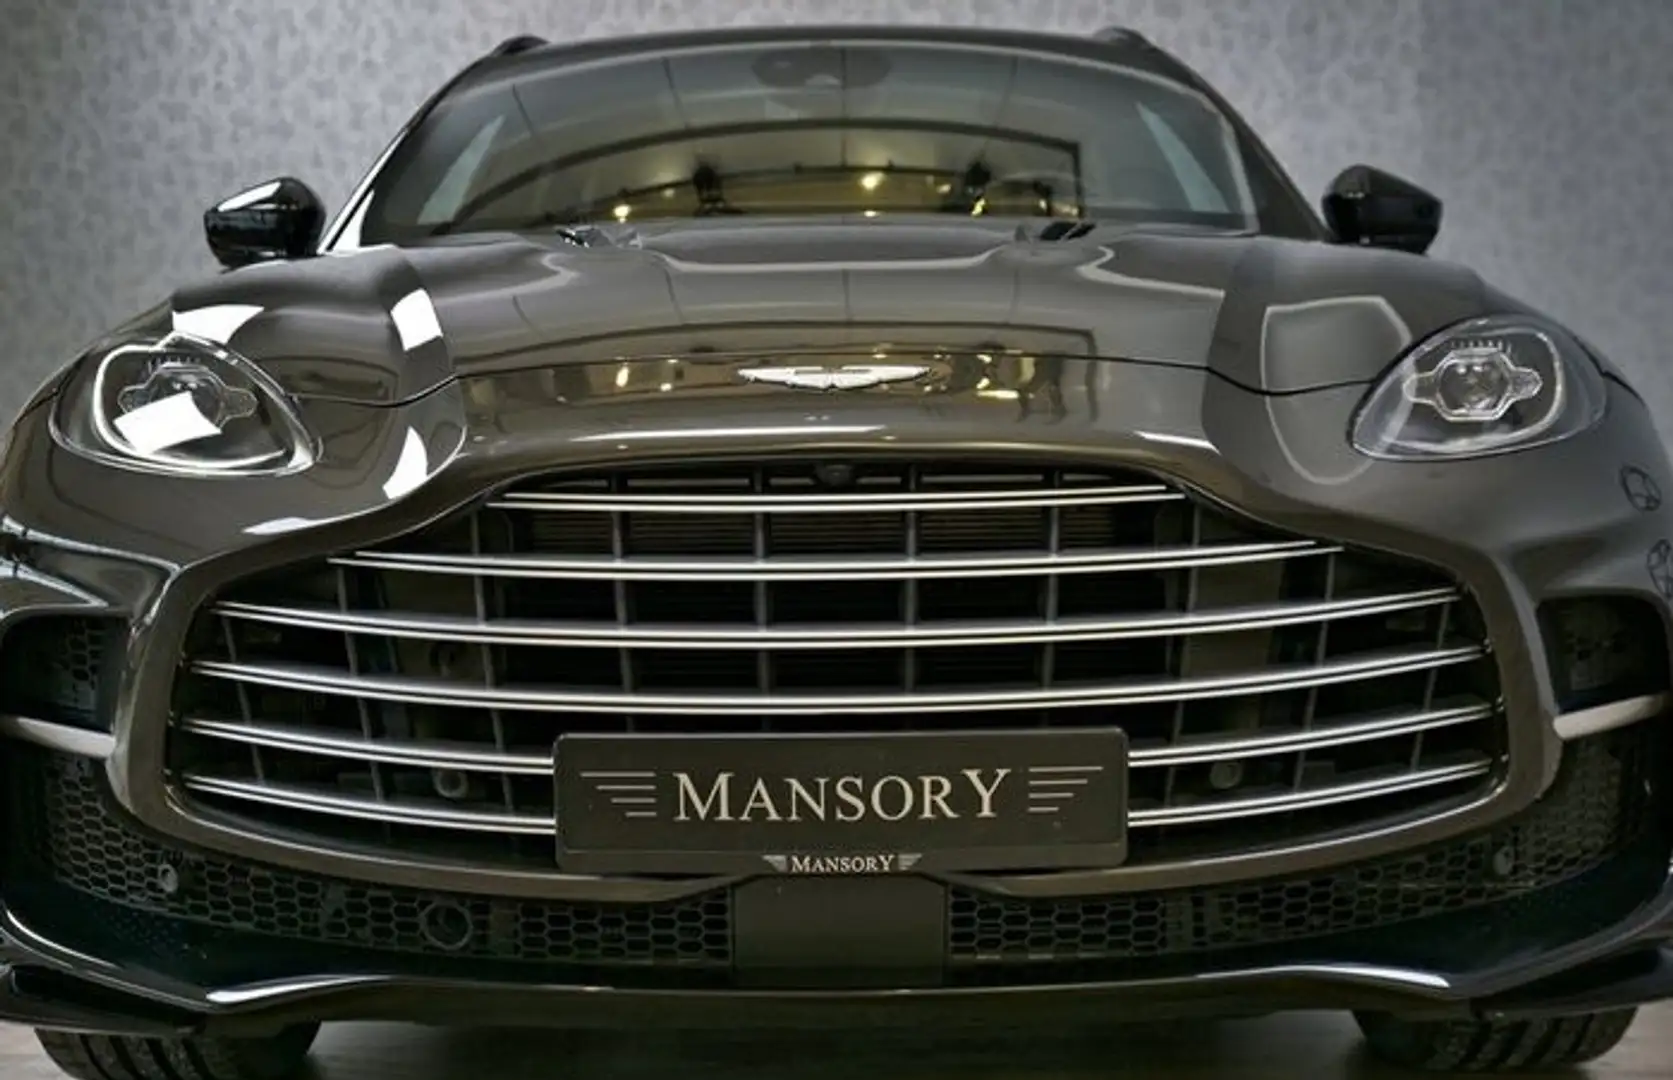 Aston Martin DBX SUV/4x4/Pickup en Gris ocasión en Madrid por € 270.900,-